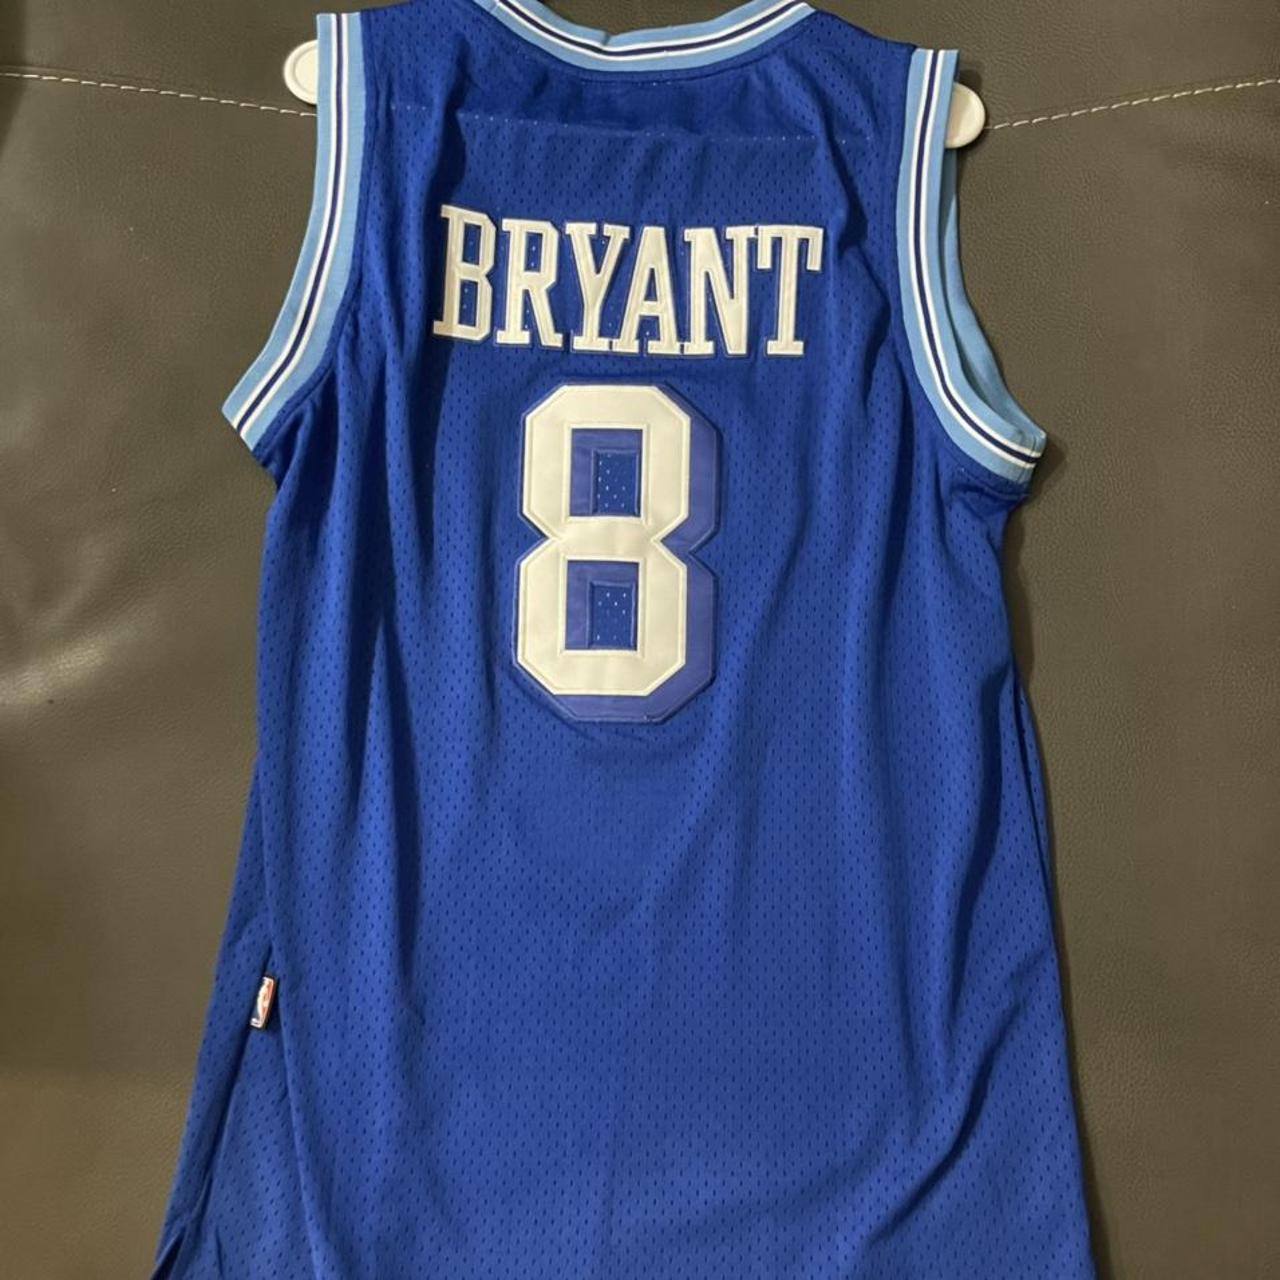 Los Angeles Lakers Kobe Bryant Jersey stitched - Depop